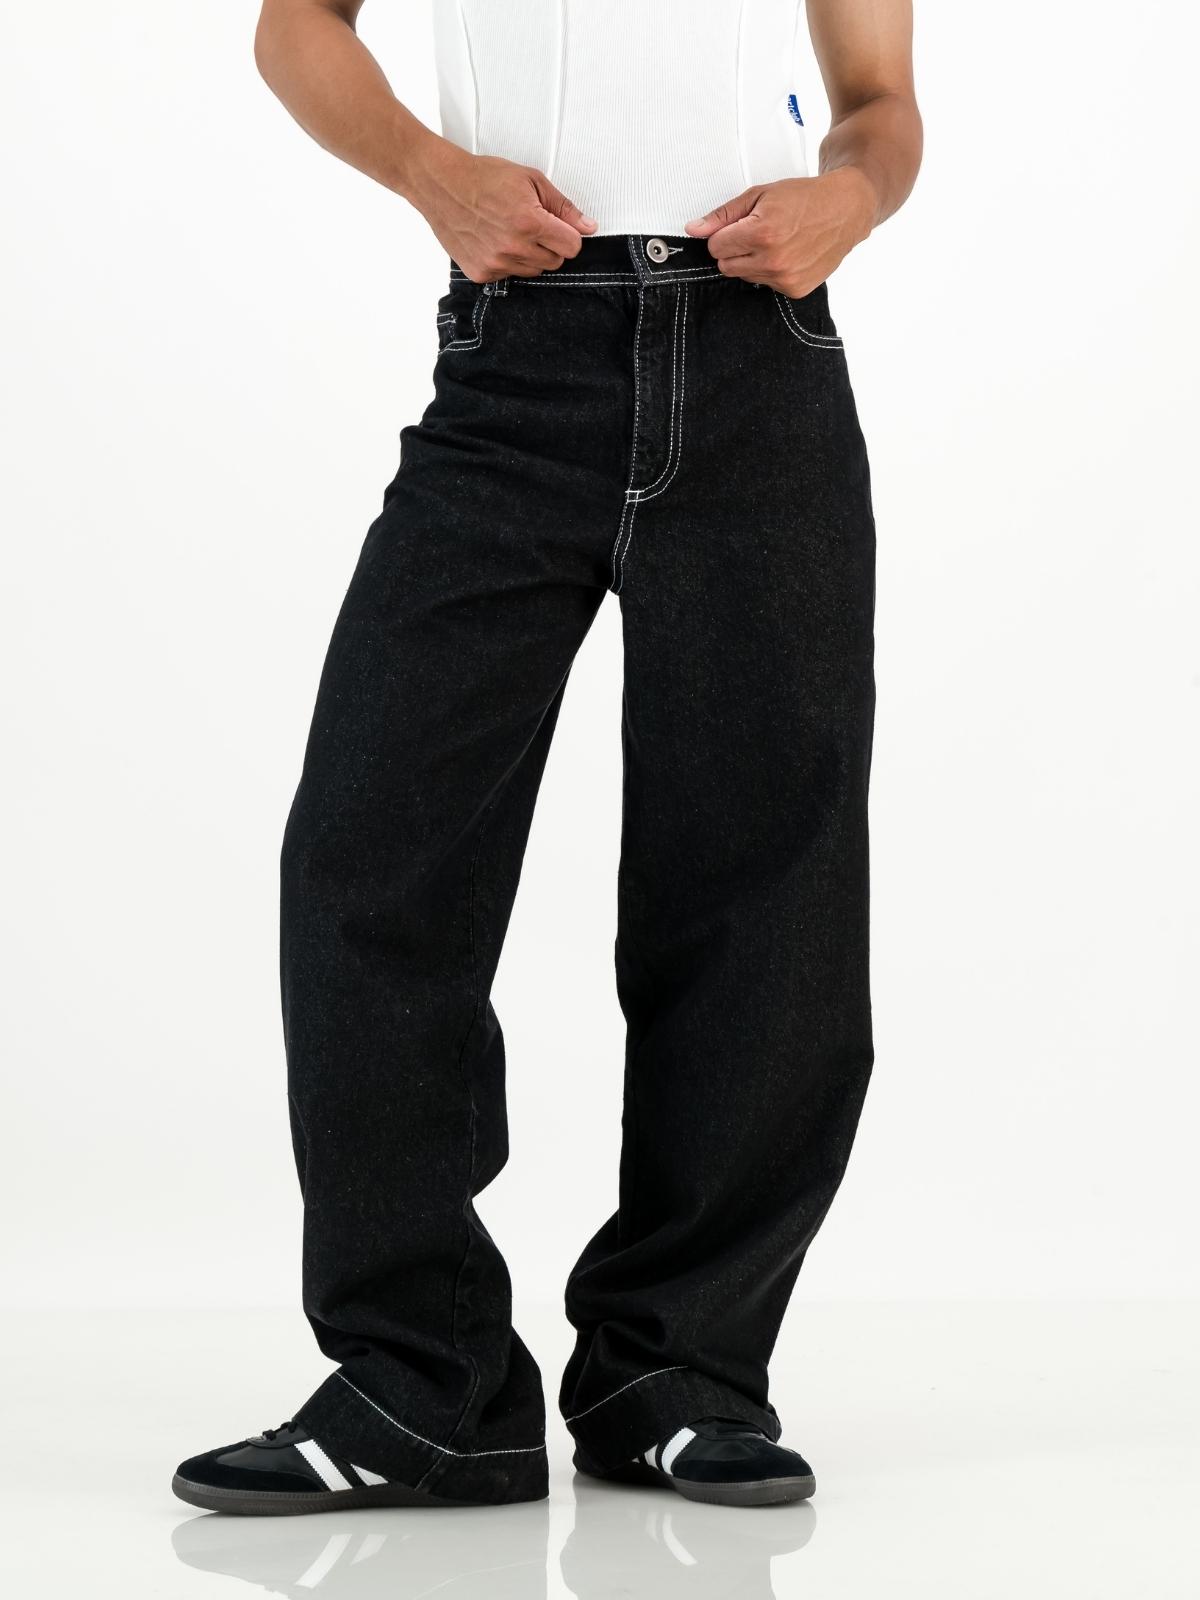 Unisex Jeans - Black